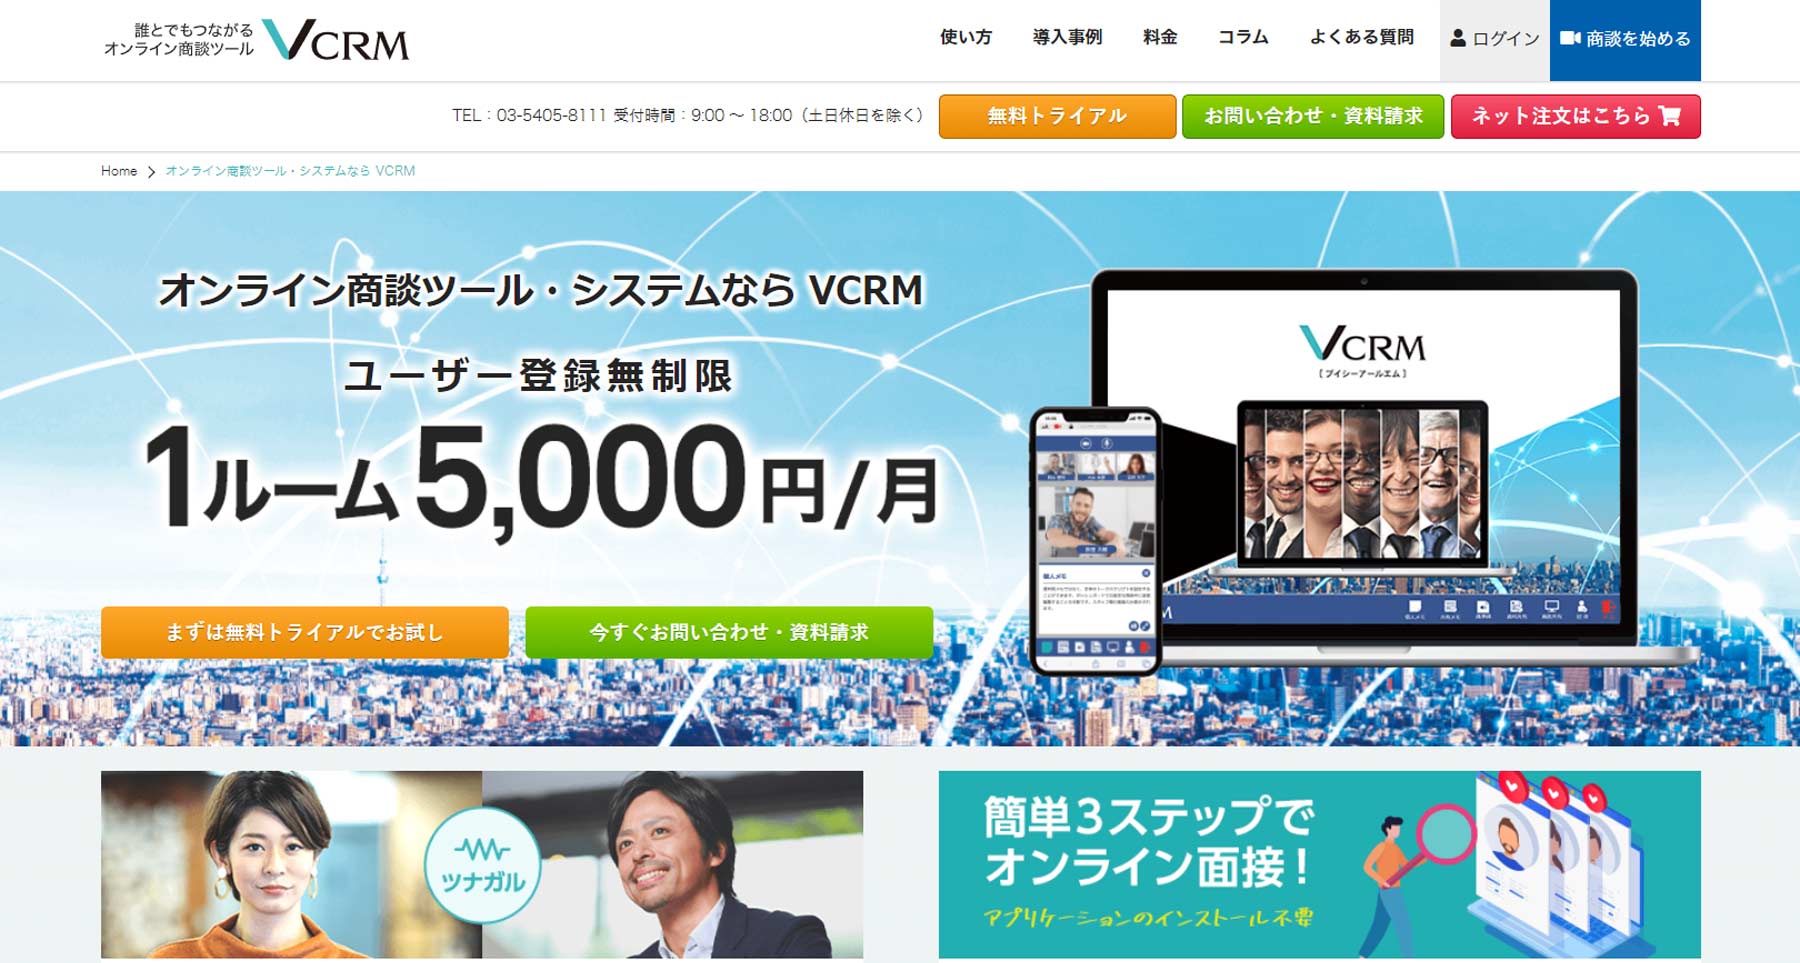 VCRM公式Webサイト